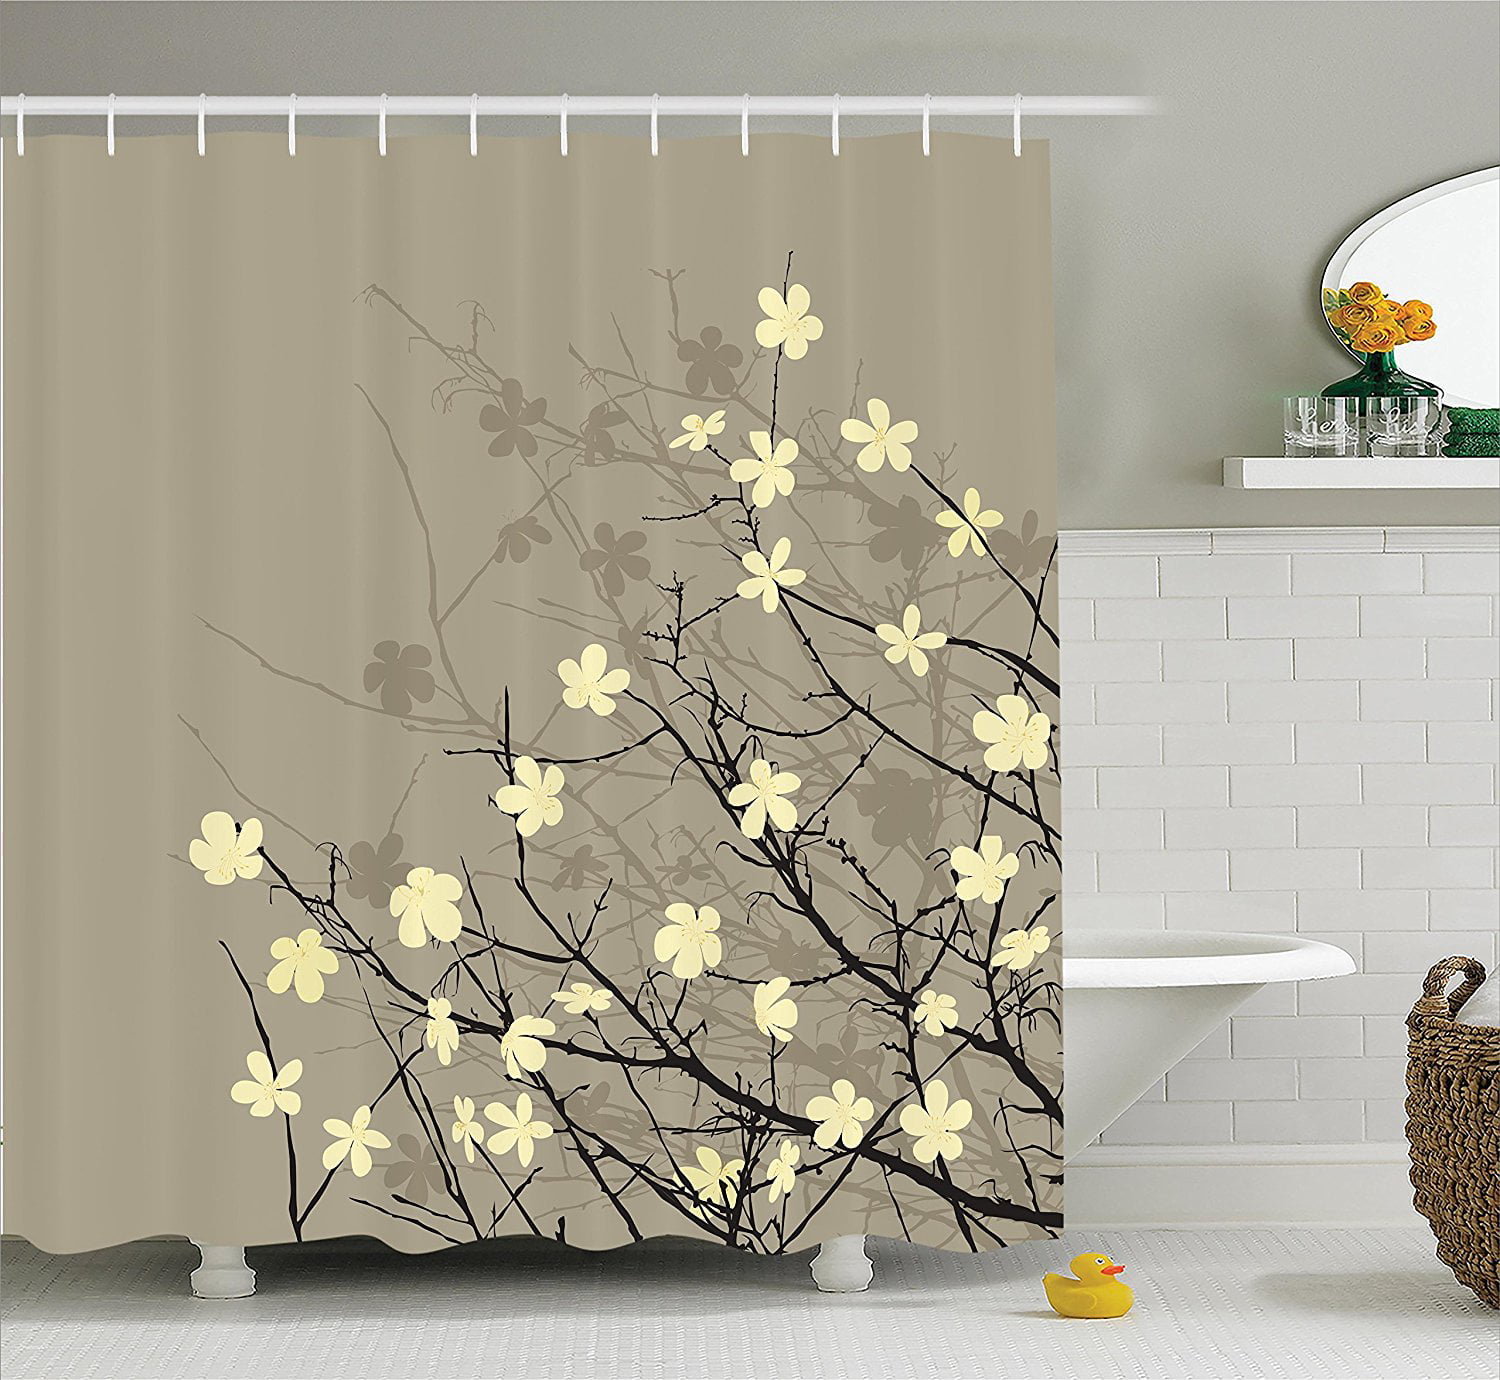 Details about   Mandala Shower Curtain Sketchy Modern Waves Print for Bathroom 